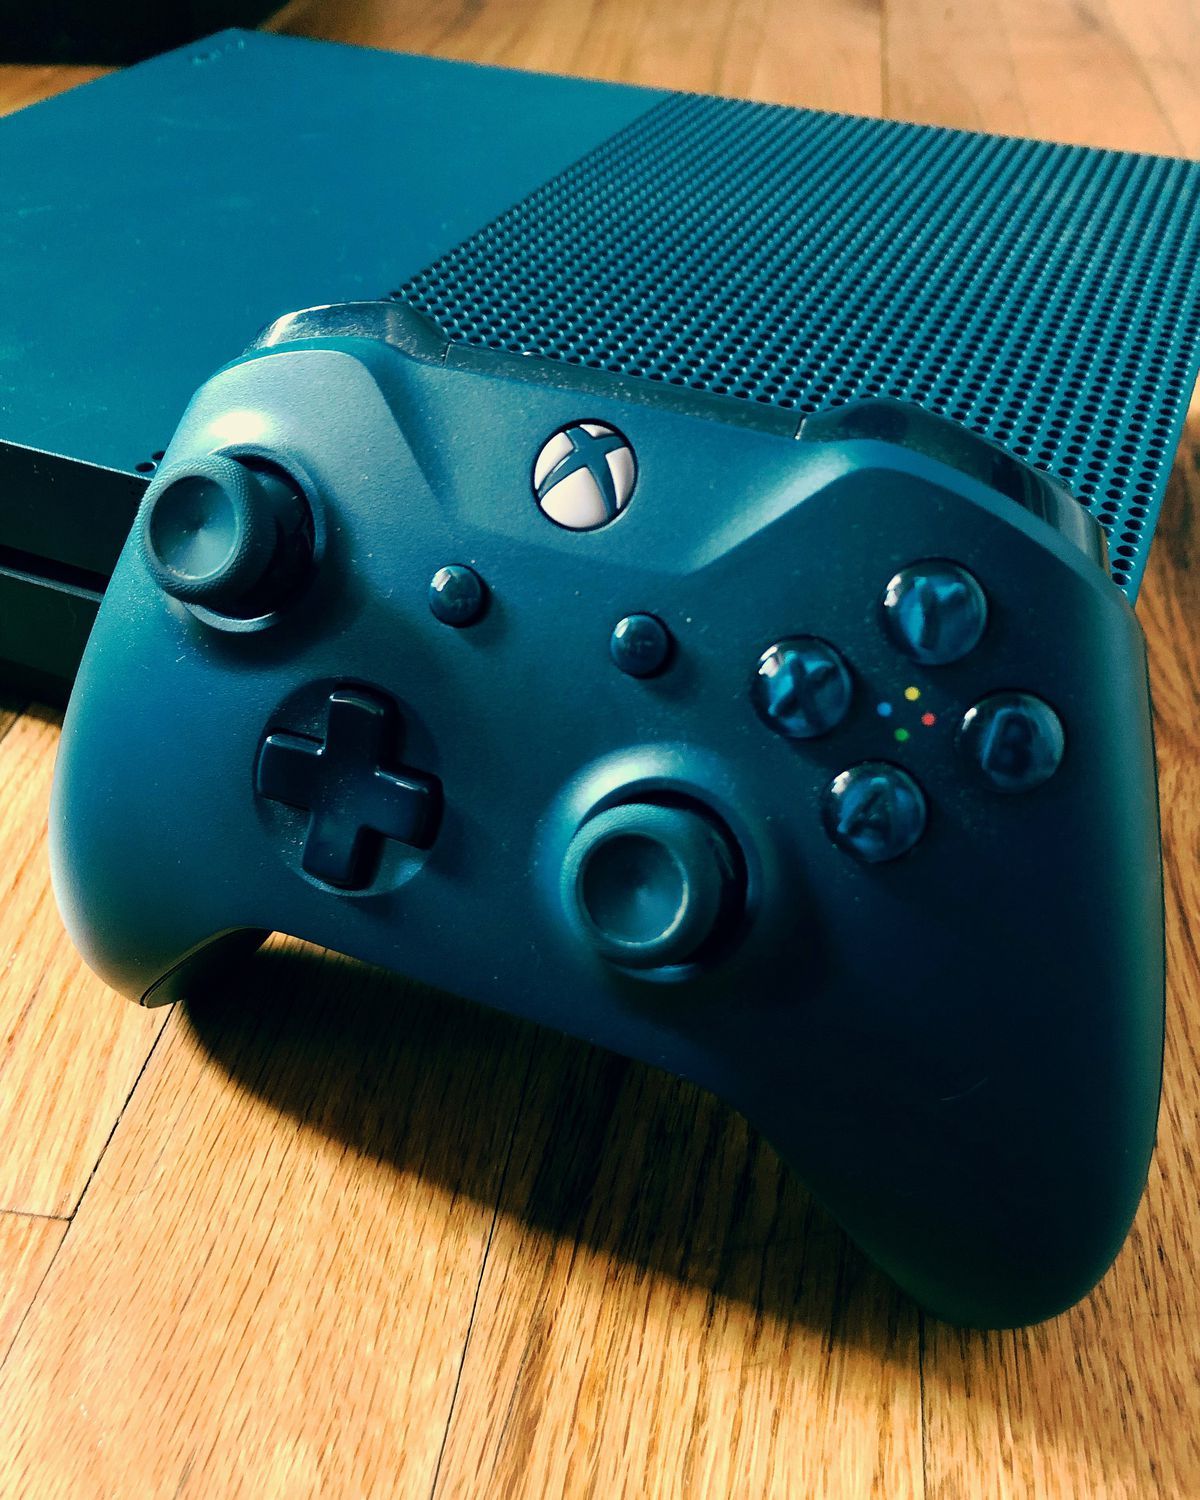 23 Things That Make No Sense About Xbox One